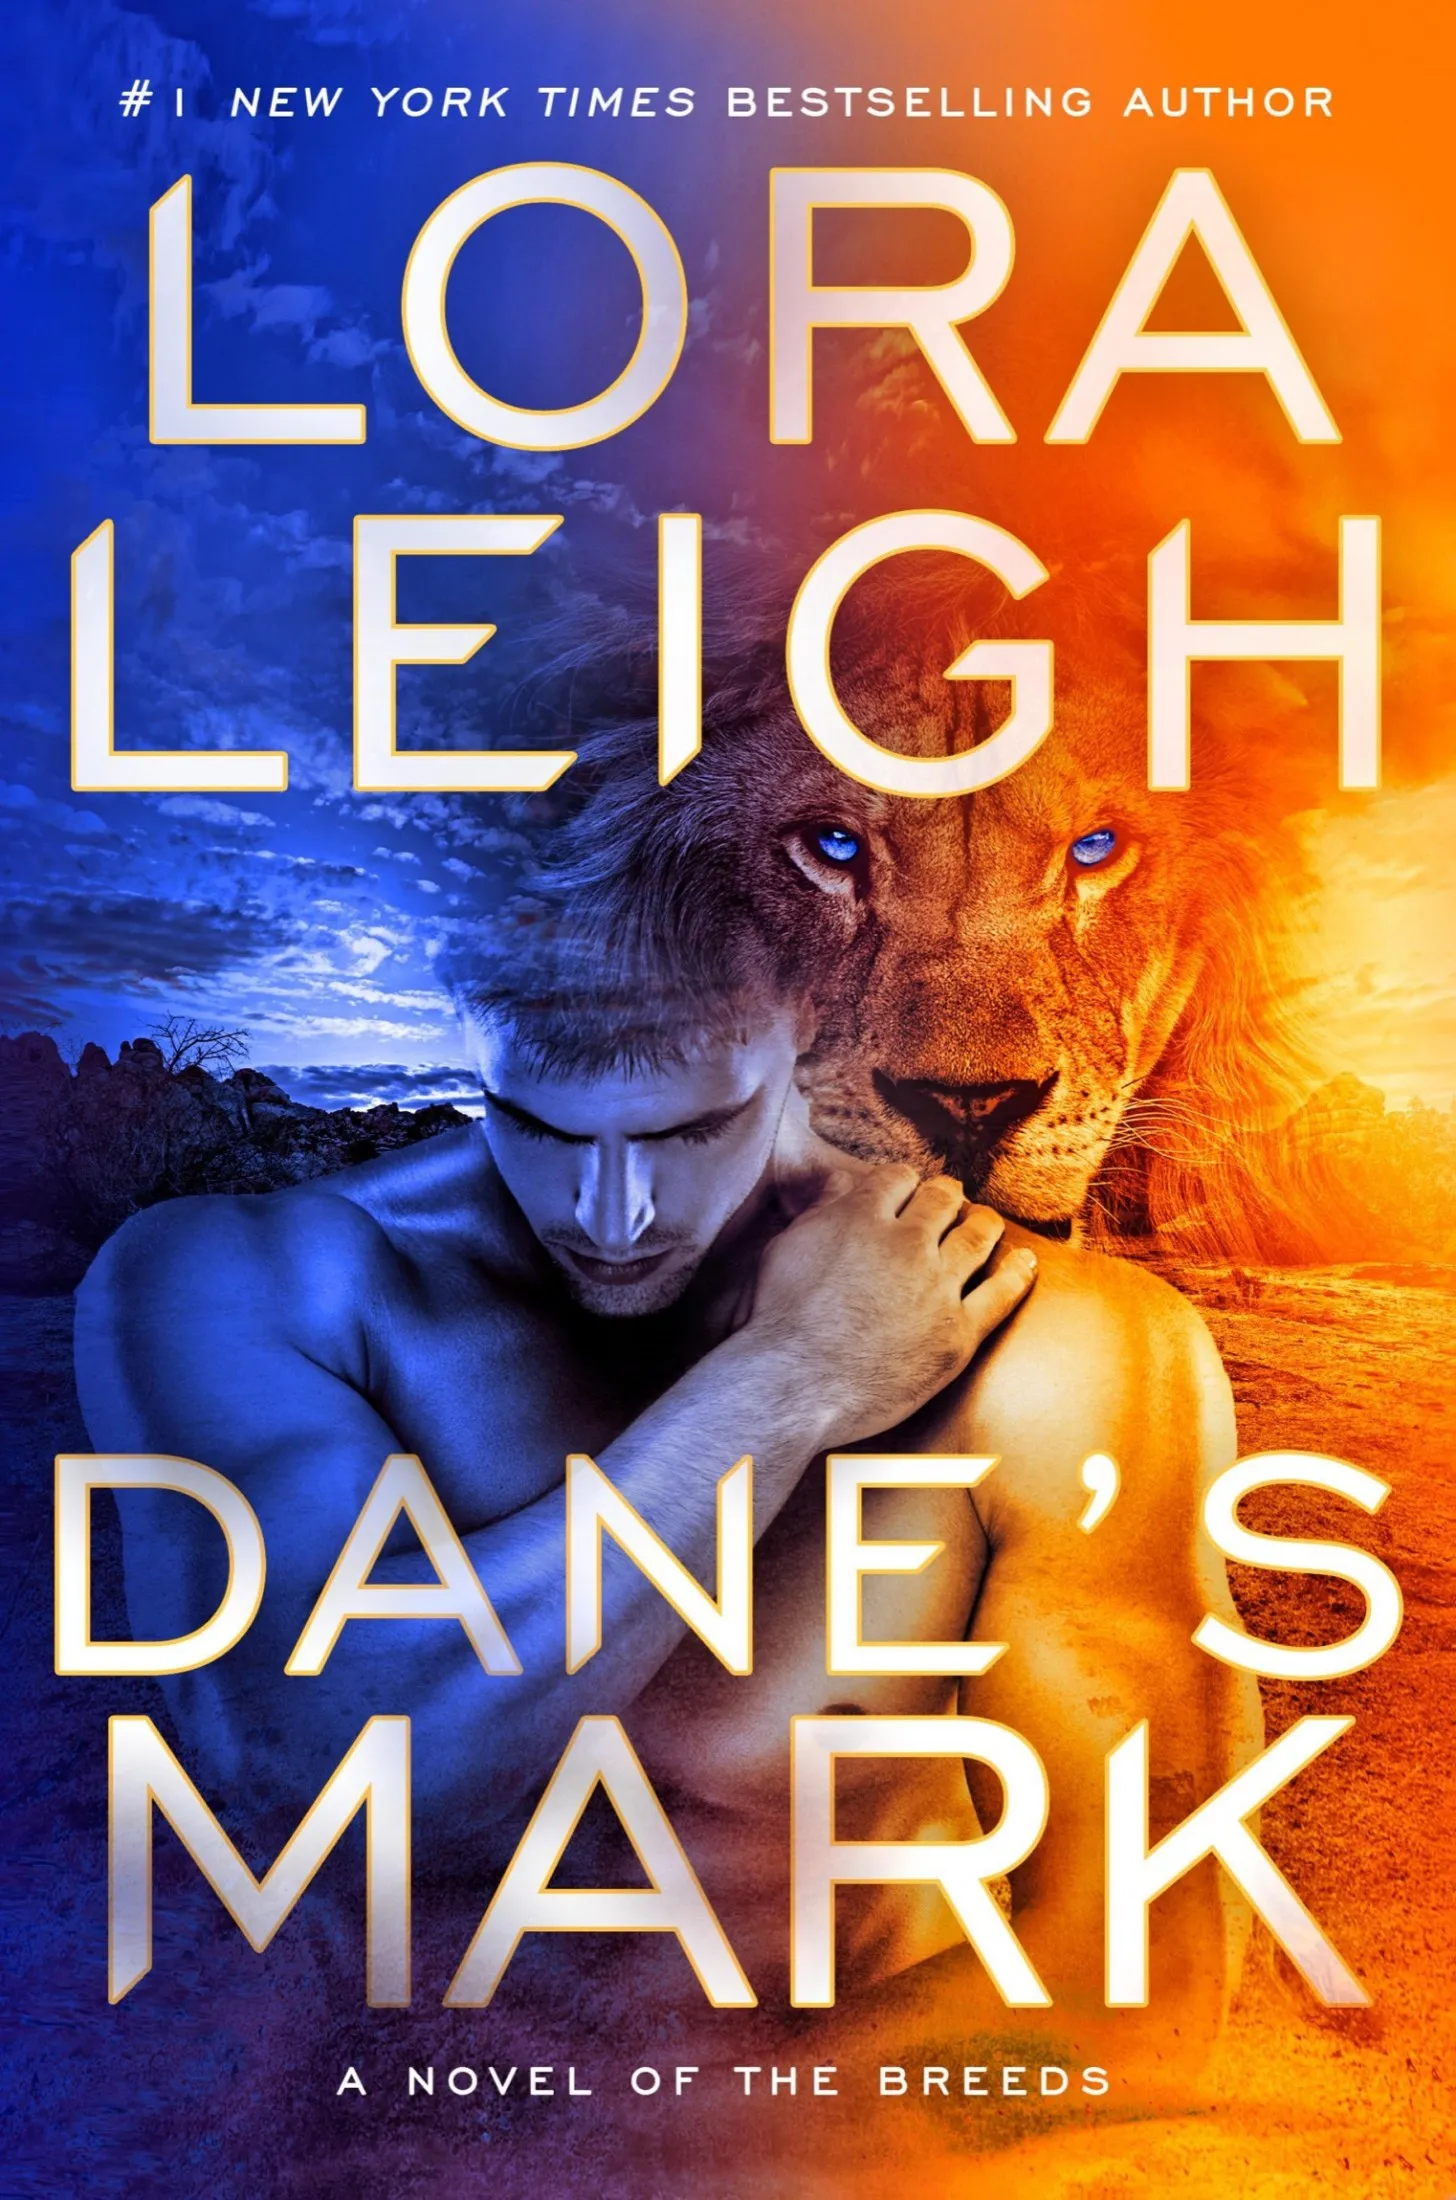 Dane's Mark (A Novel of the Breeds #33)